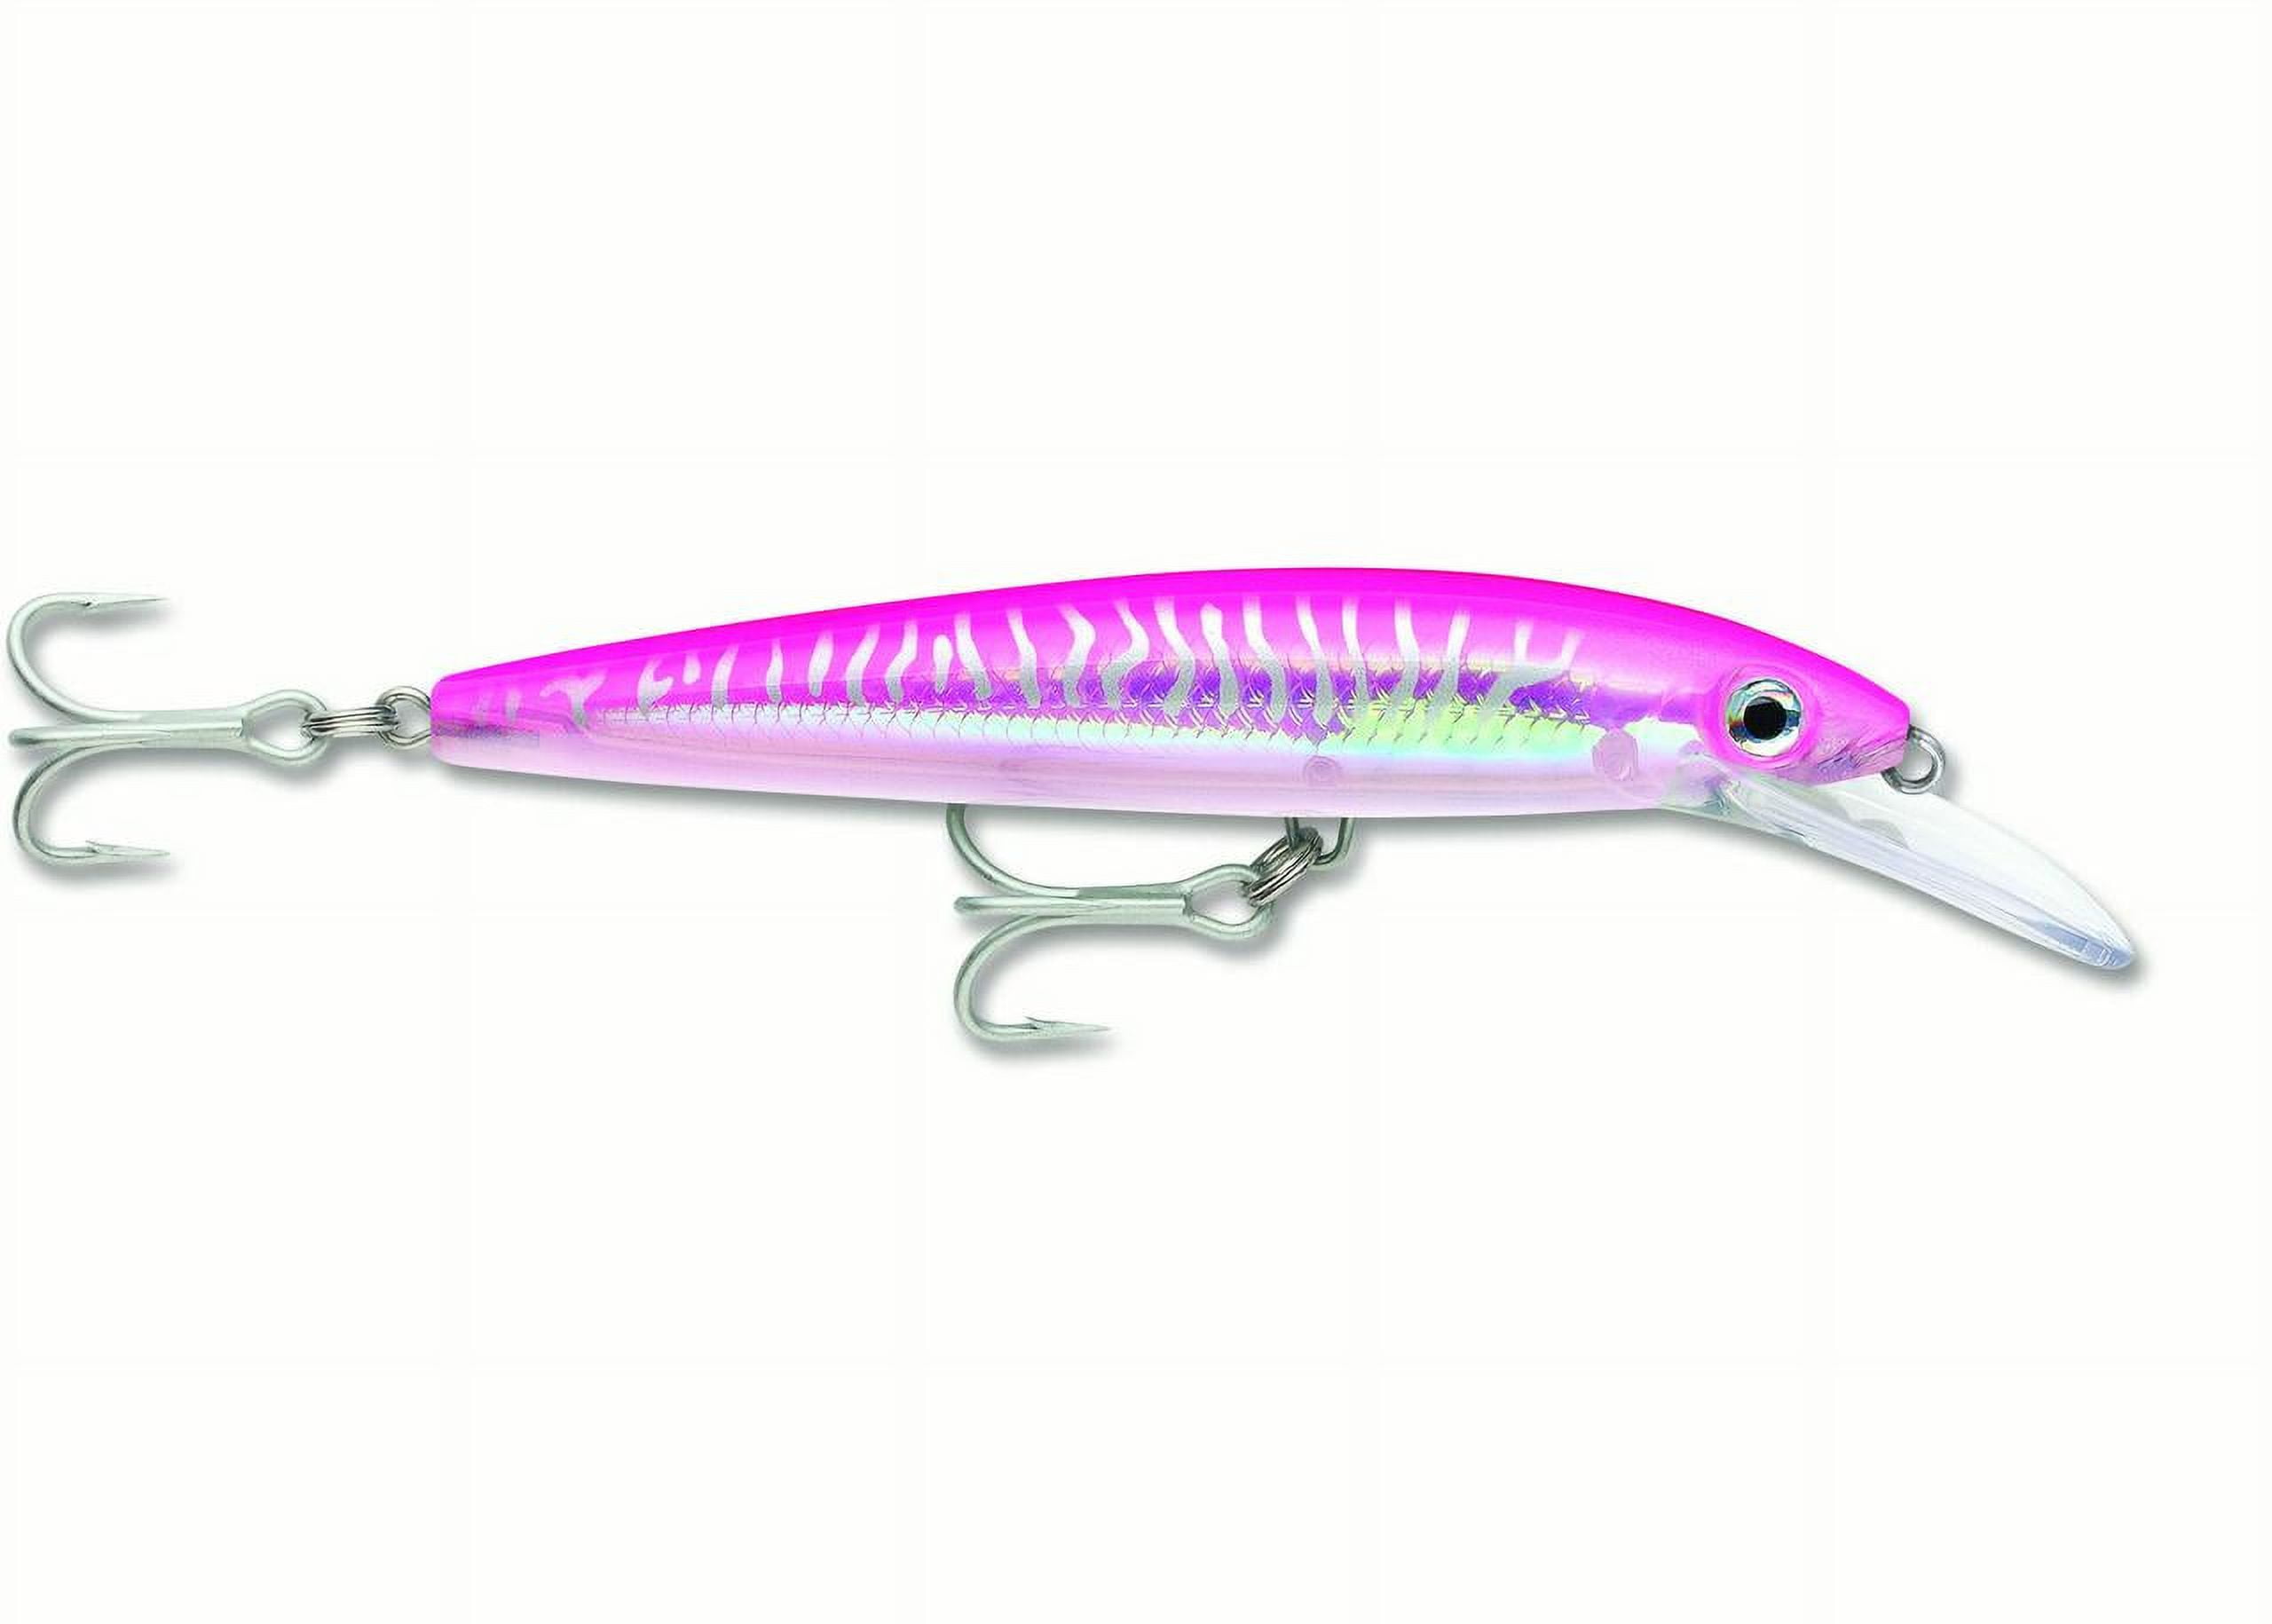 Rapala Husky Magnum 15 Fishing Lure - Hot Pink UV - 15 Ft. Running Depth 